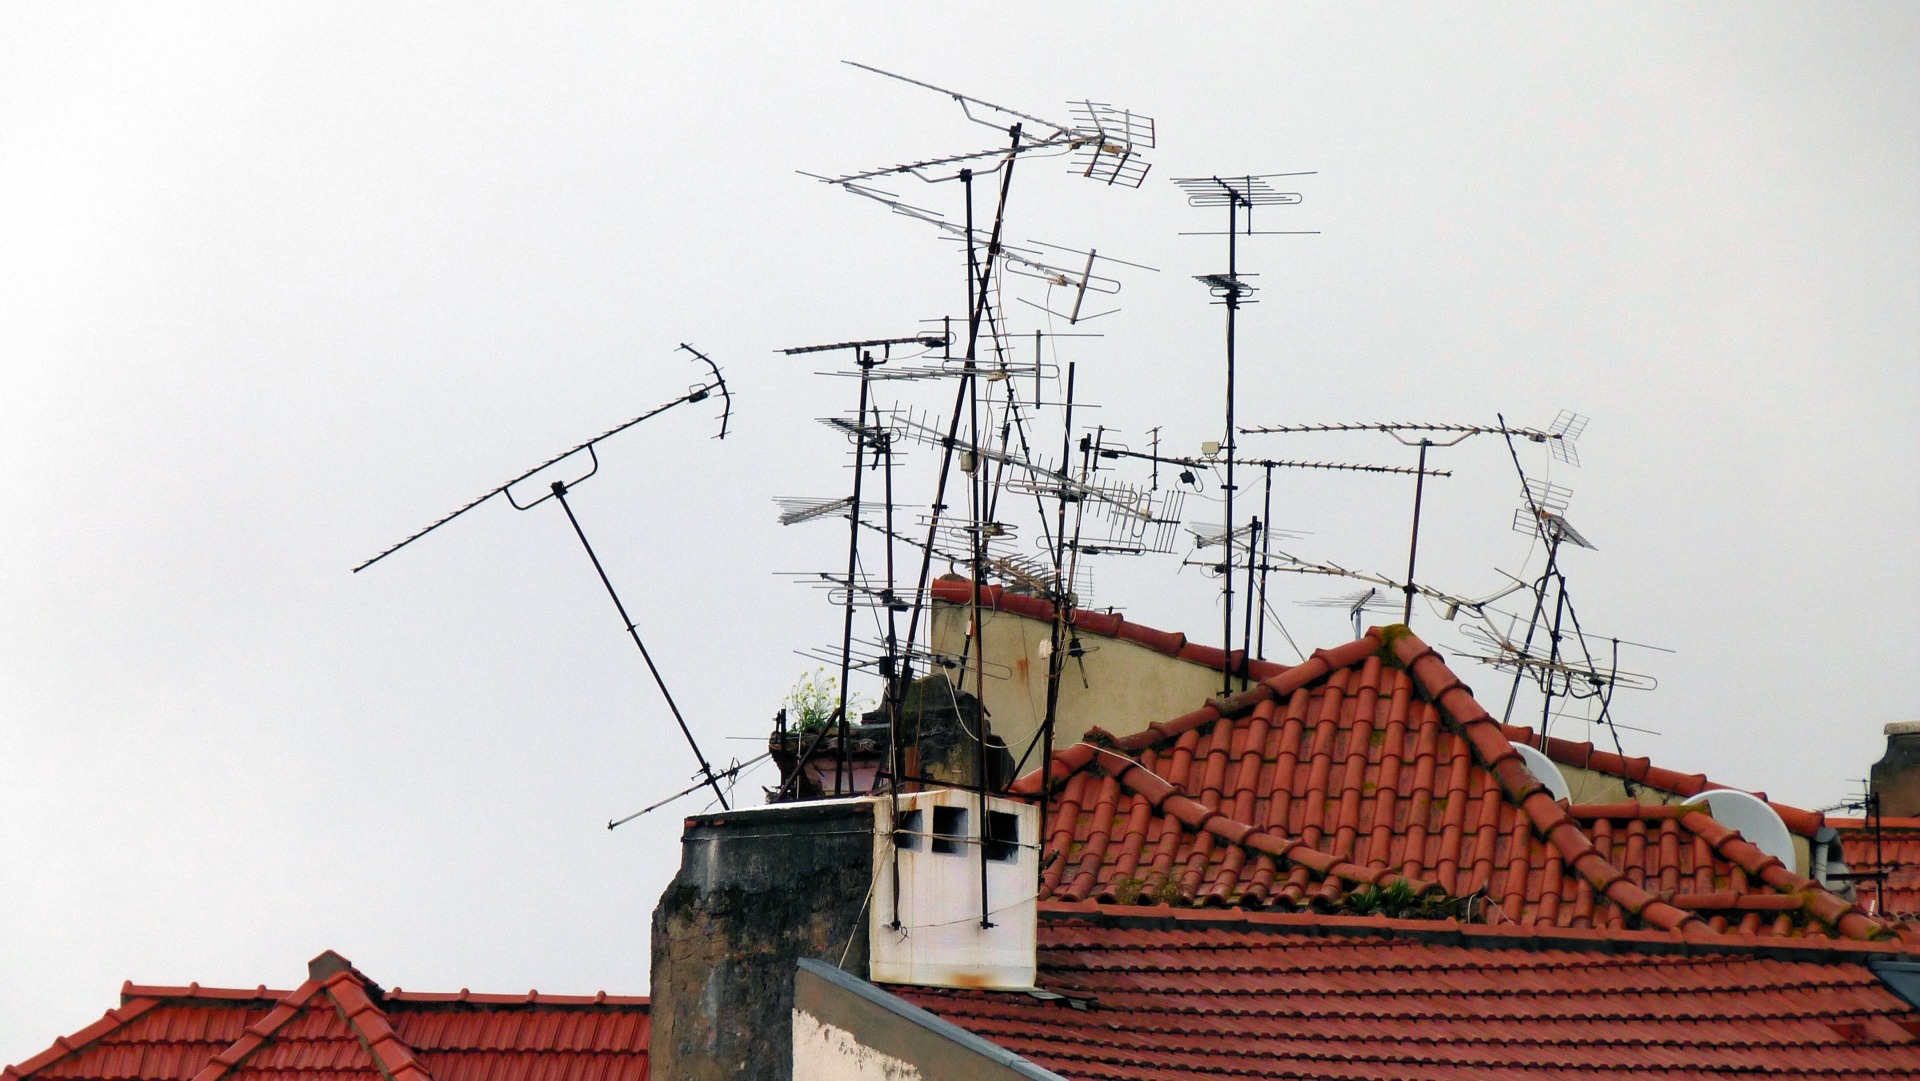 Как выбрать антенну для приема цифровых каналов DVB-T2